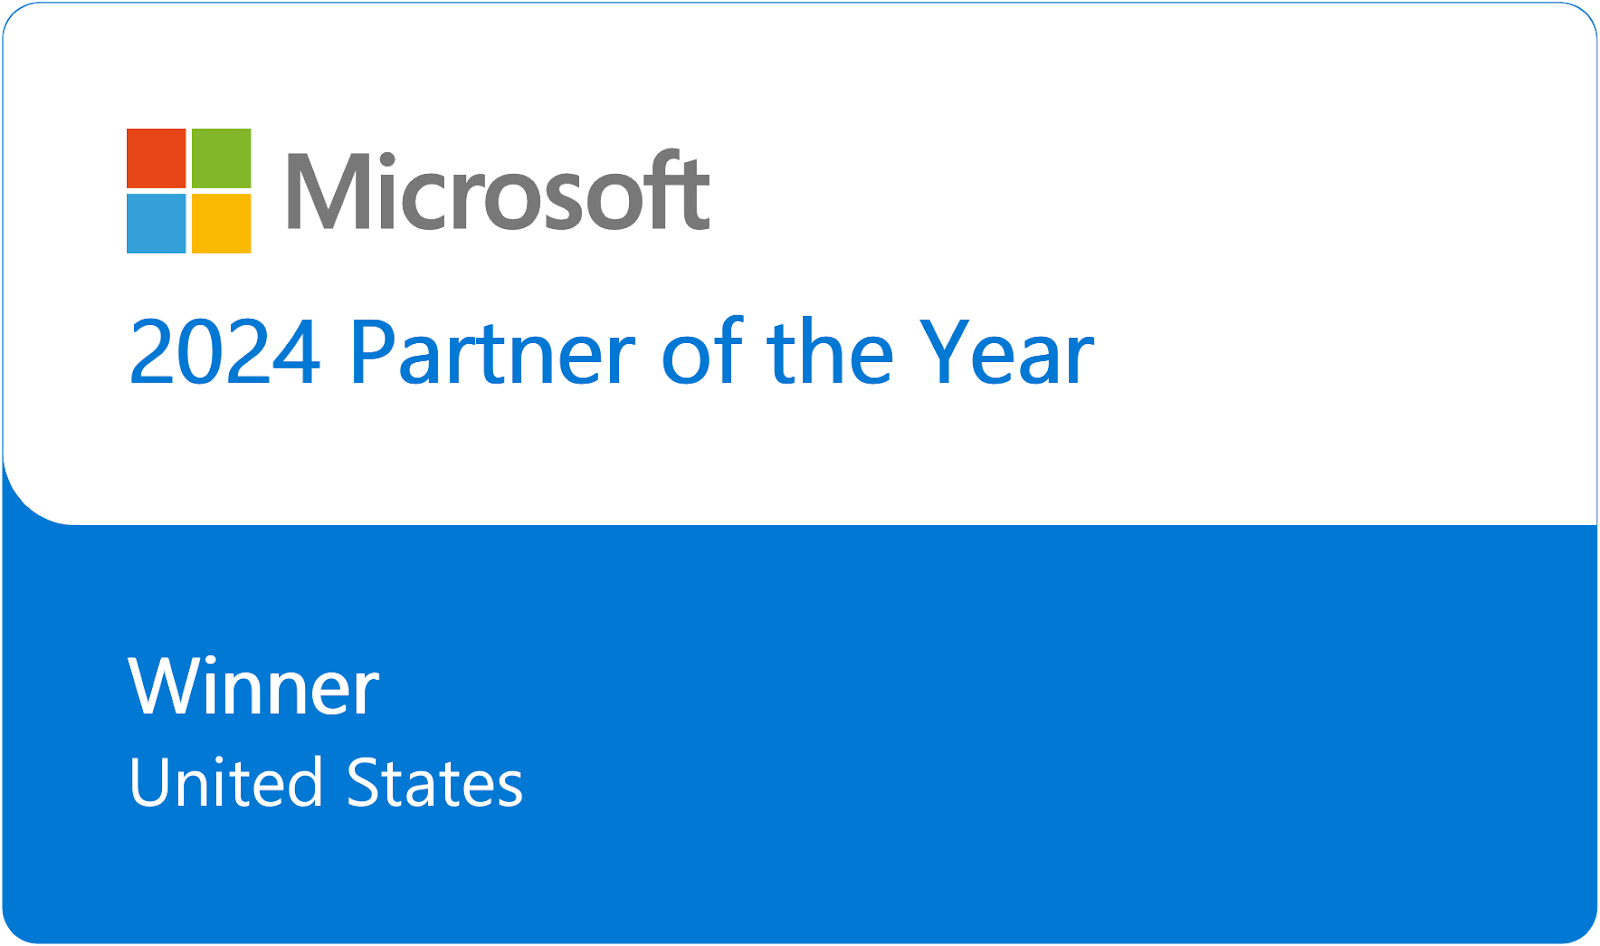 Microsoft 2024 Partner of the Year Winner - United States